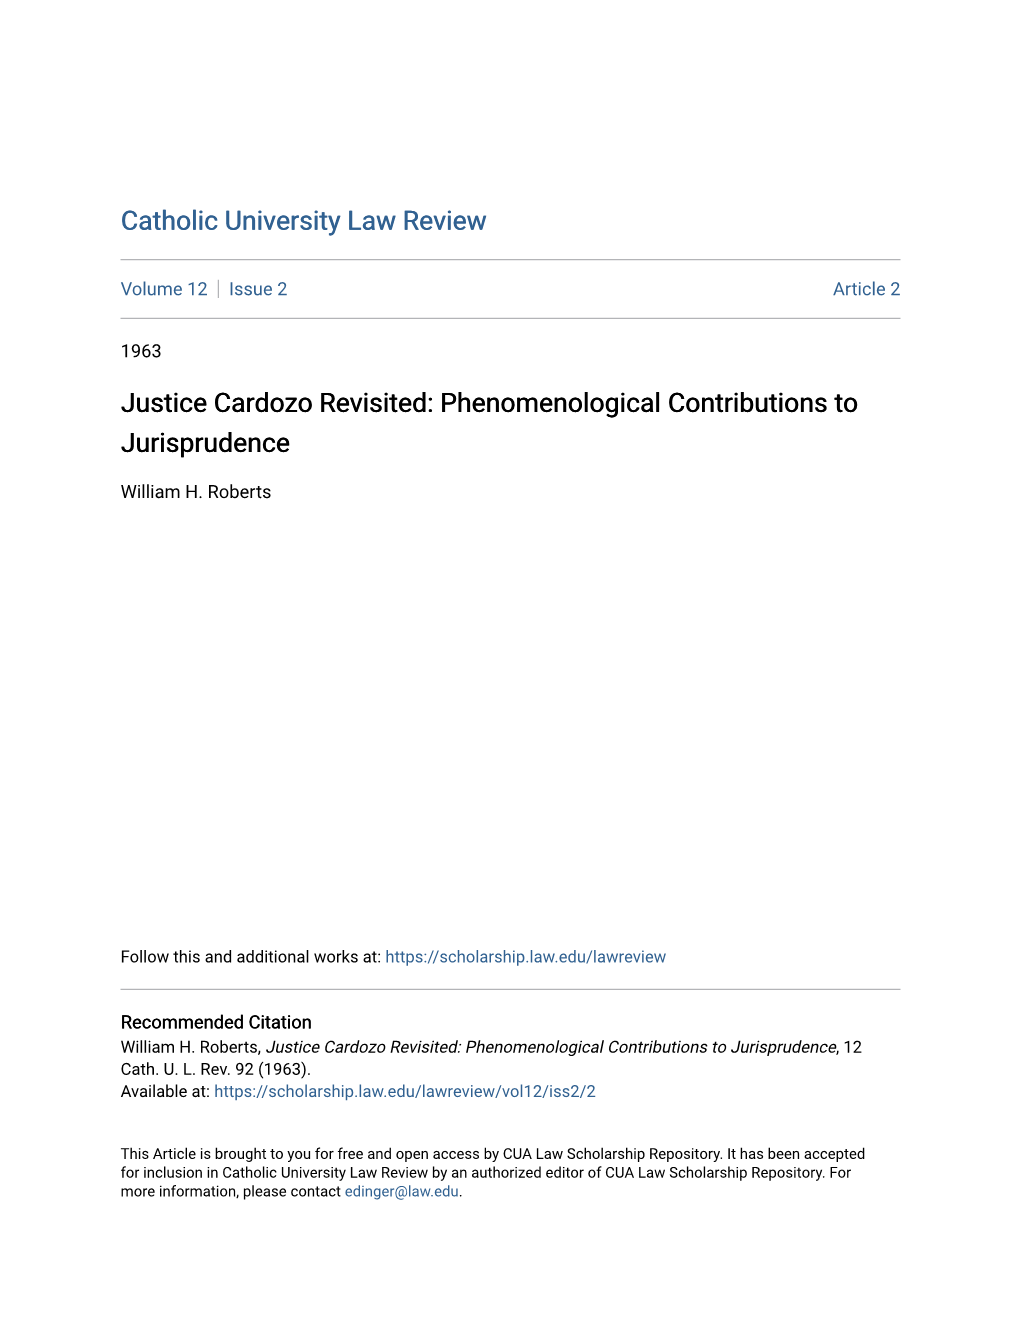 Justice Cardozo Revisited: Phenomenological Contributions to Jurisprudence